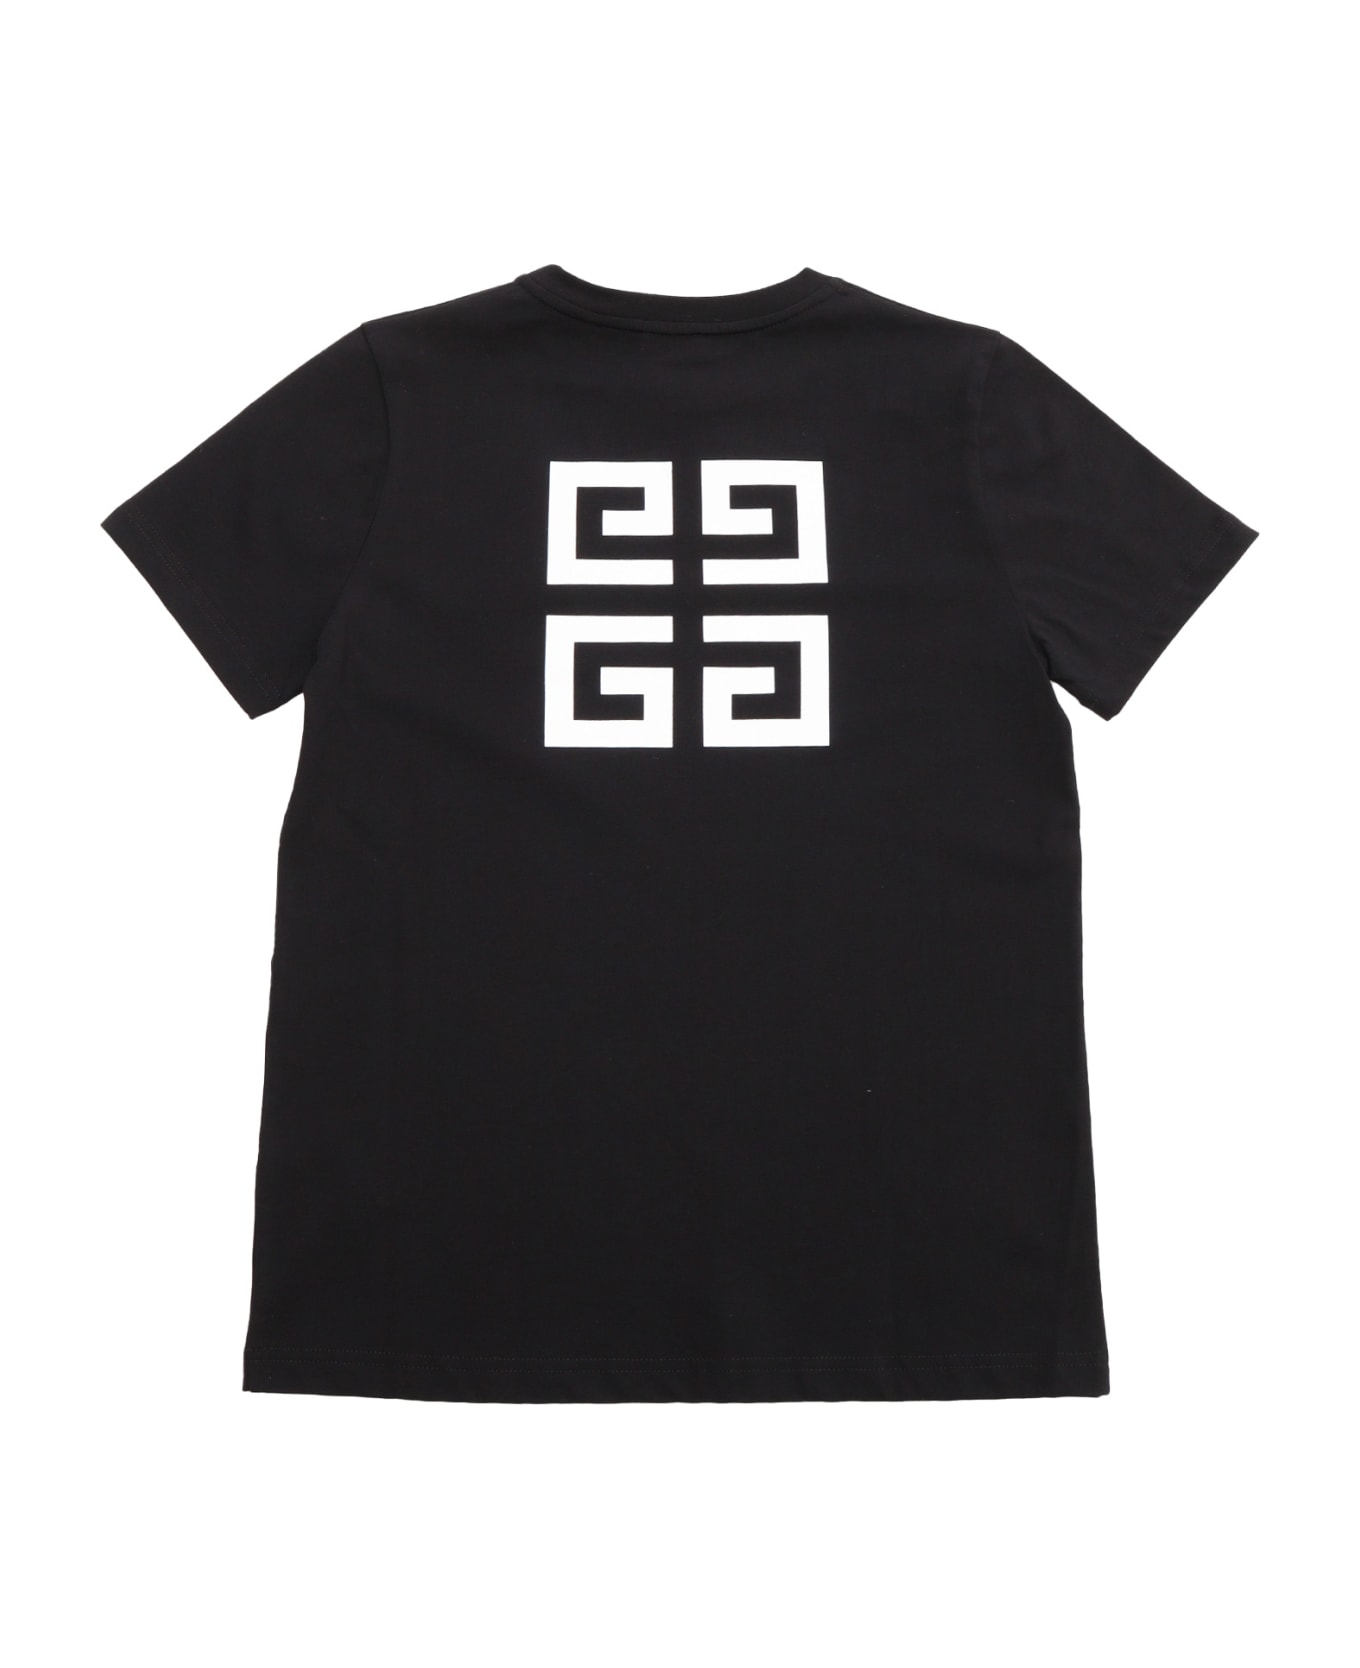 Givenchy Logo T-shirt - BLACK Tシャツ＆ポロシャツ